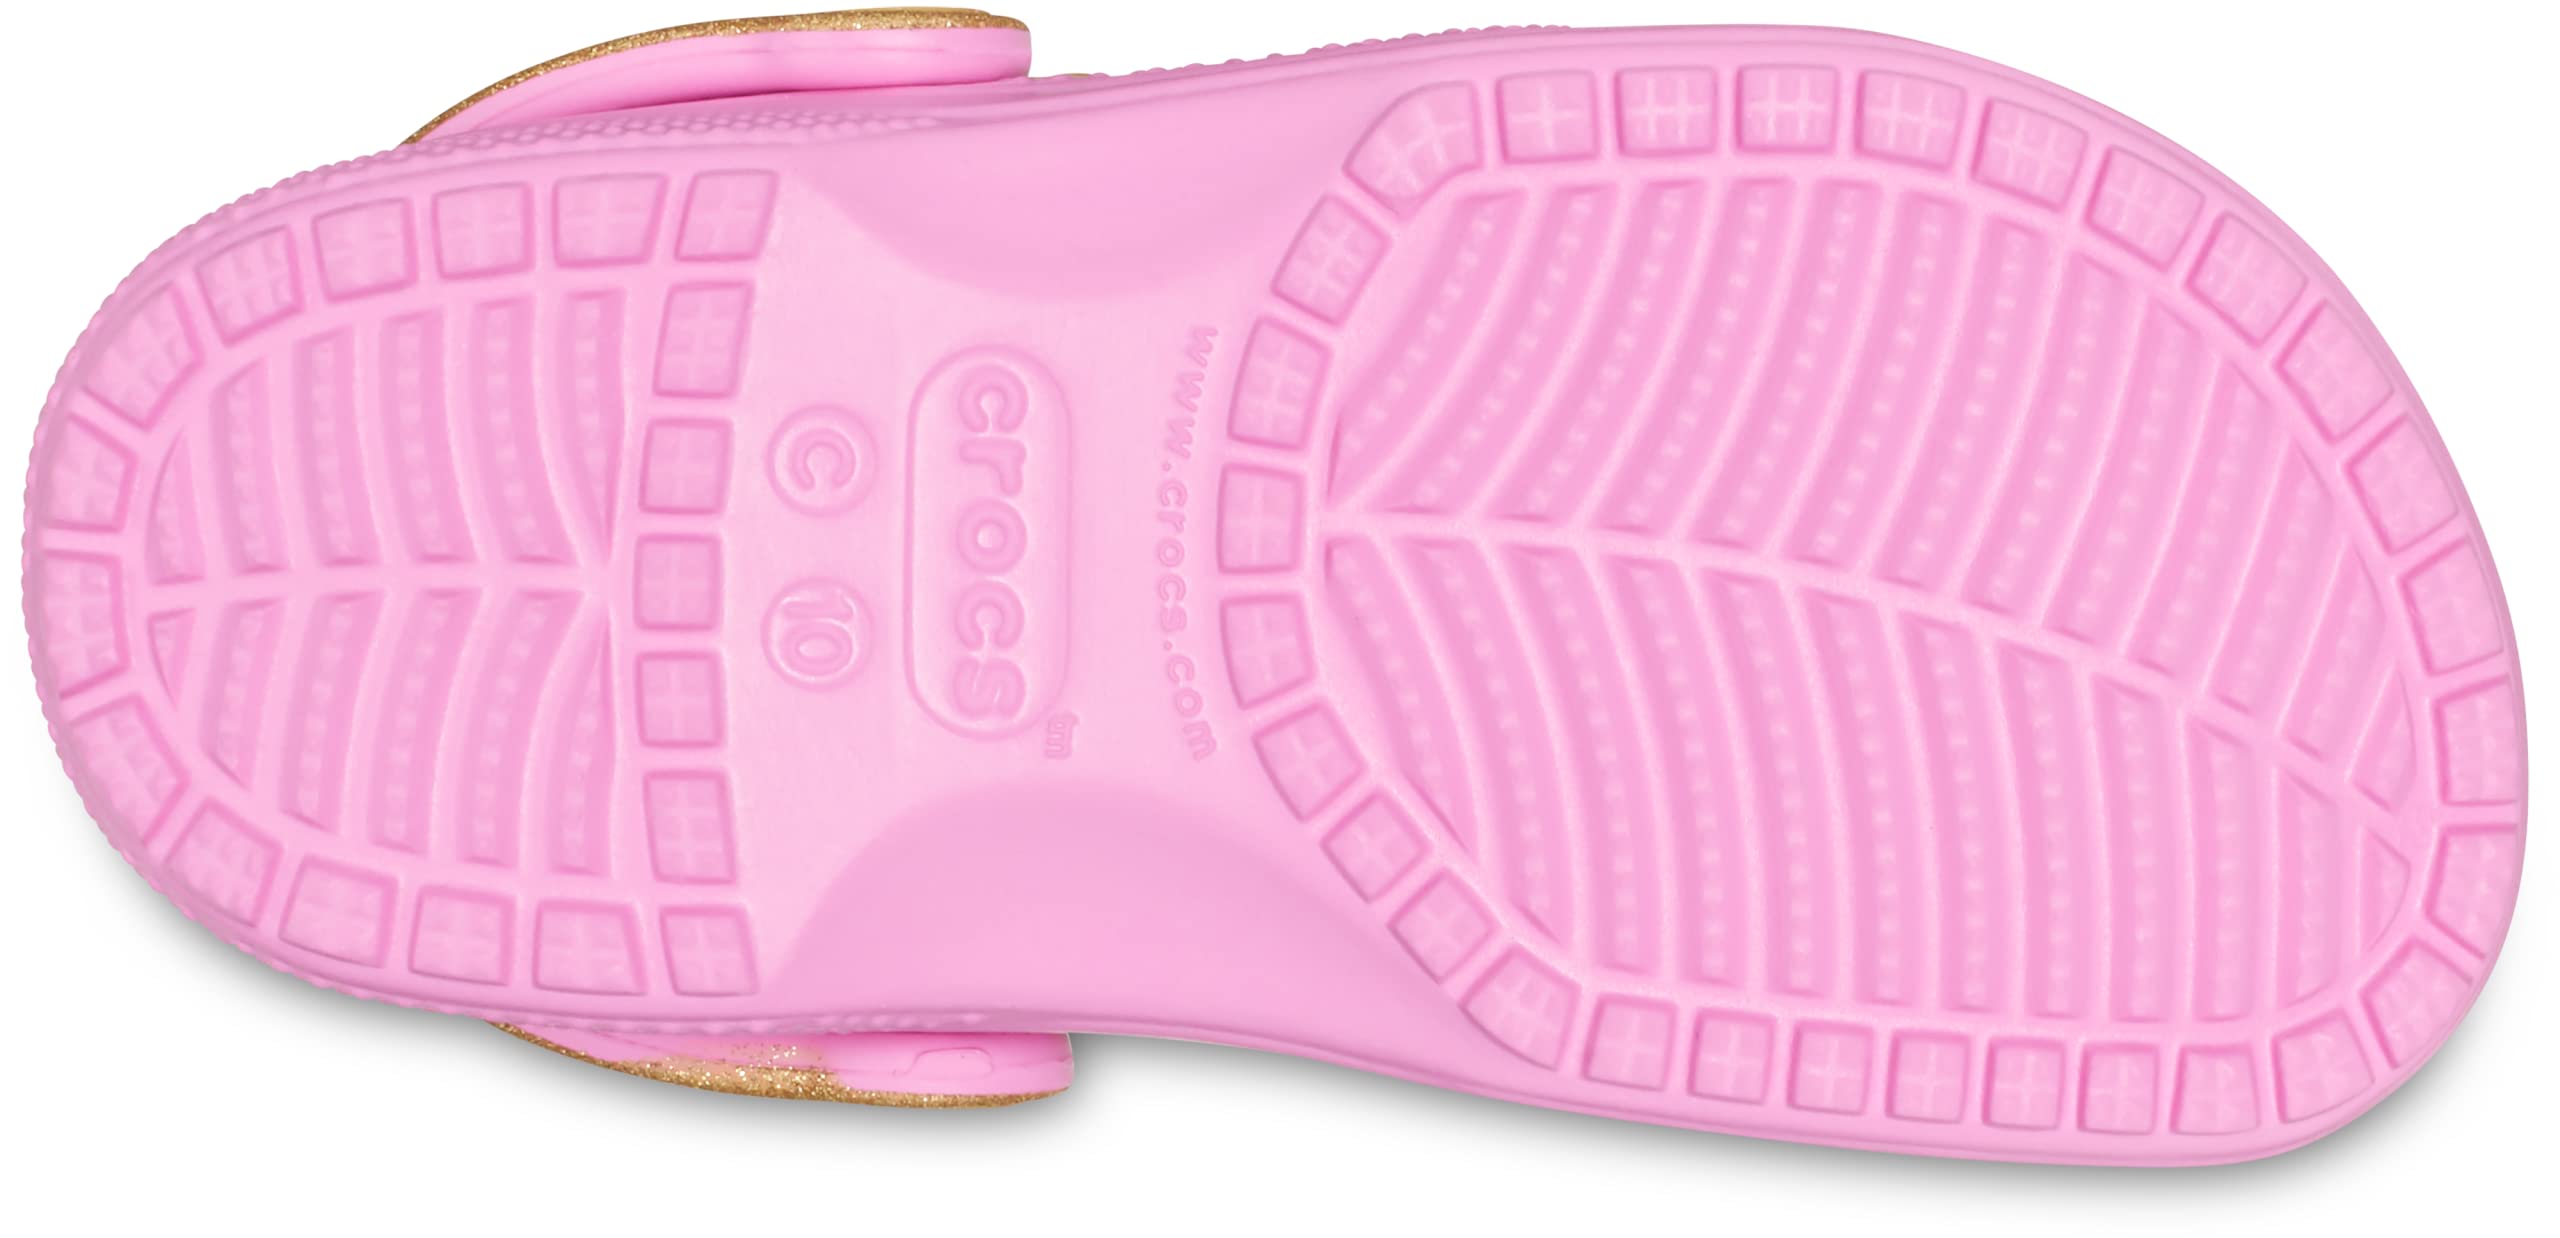 Crocs unisex-child Kids' Disney Princess Light Up Clog | Disney Light Up Shoes